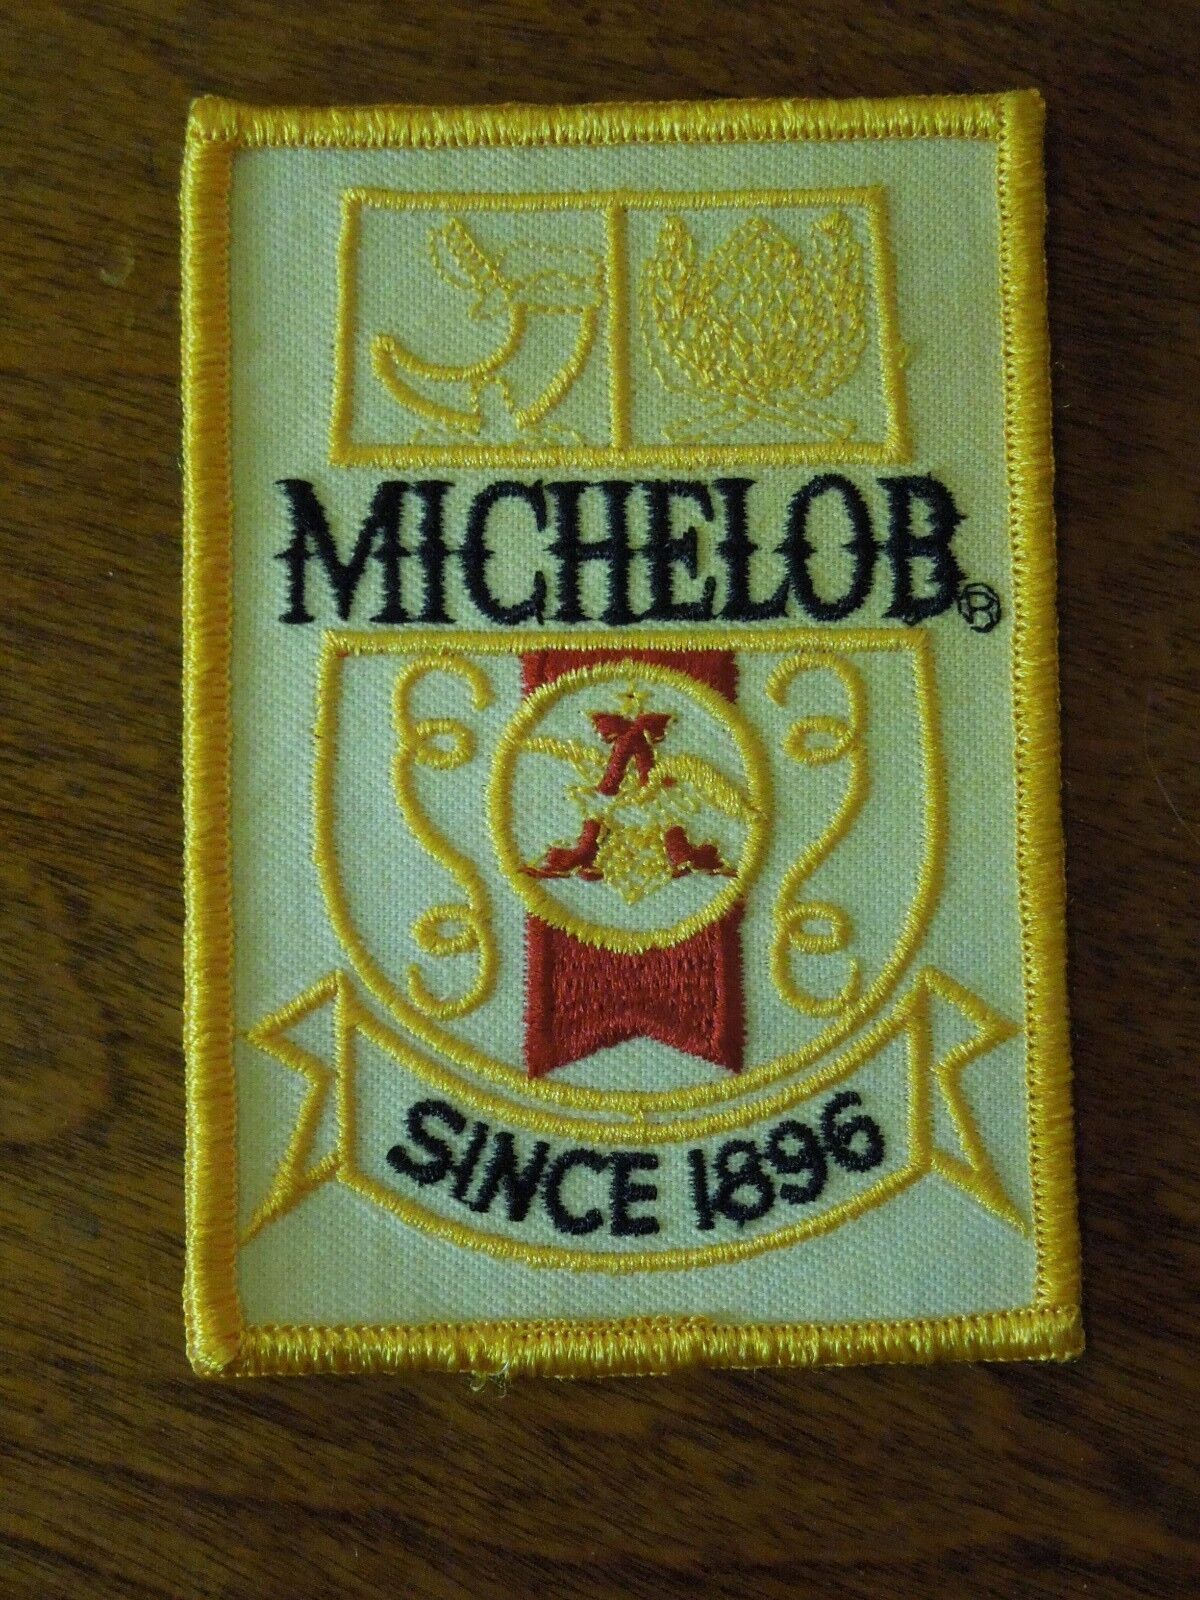 Michelob Budweiser \